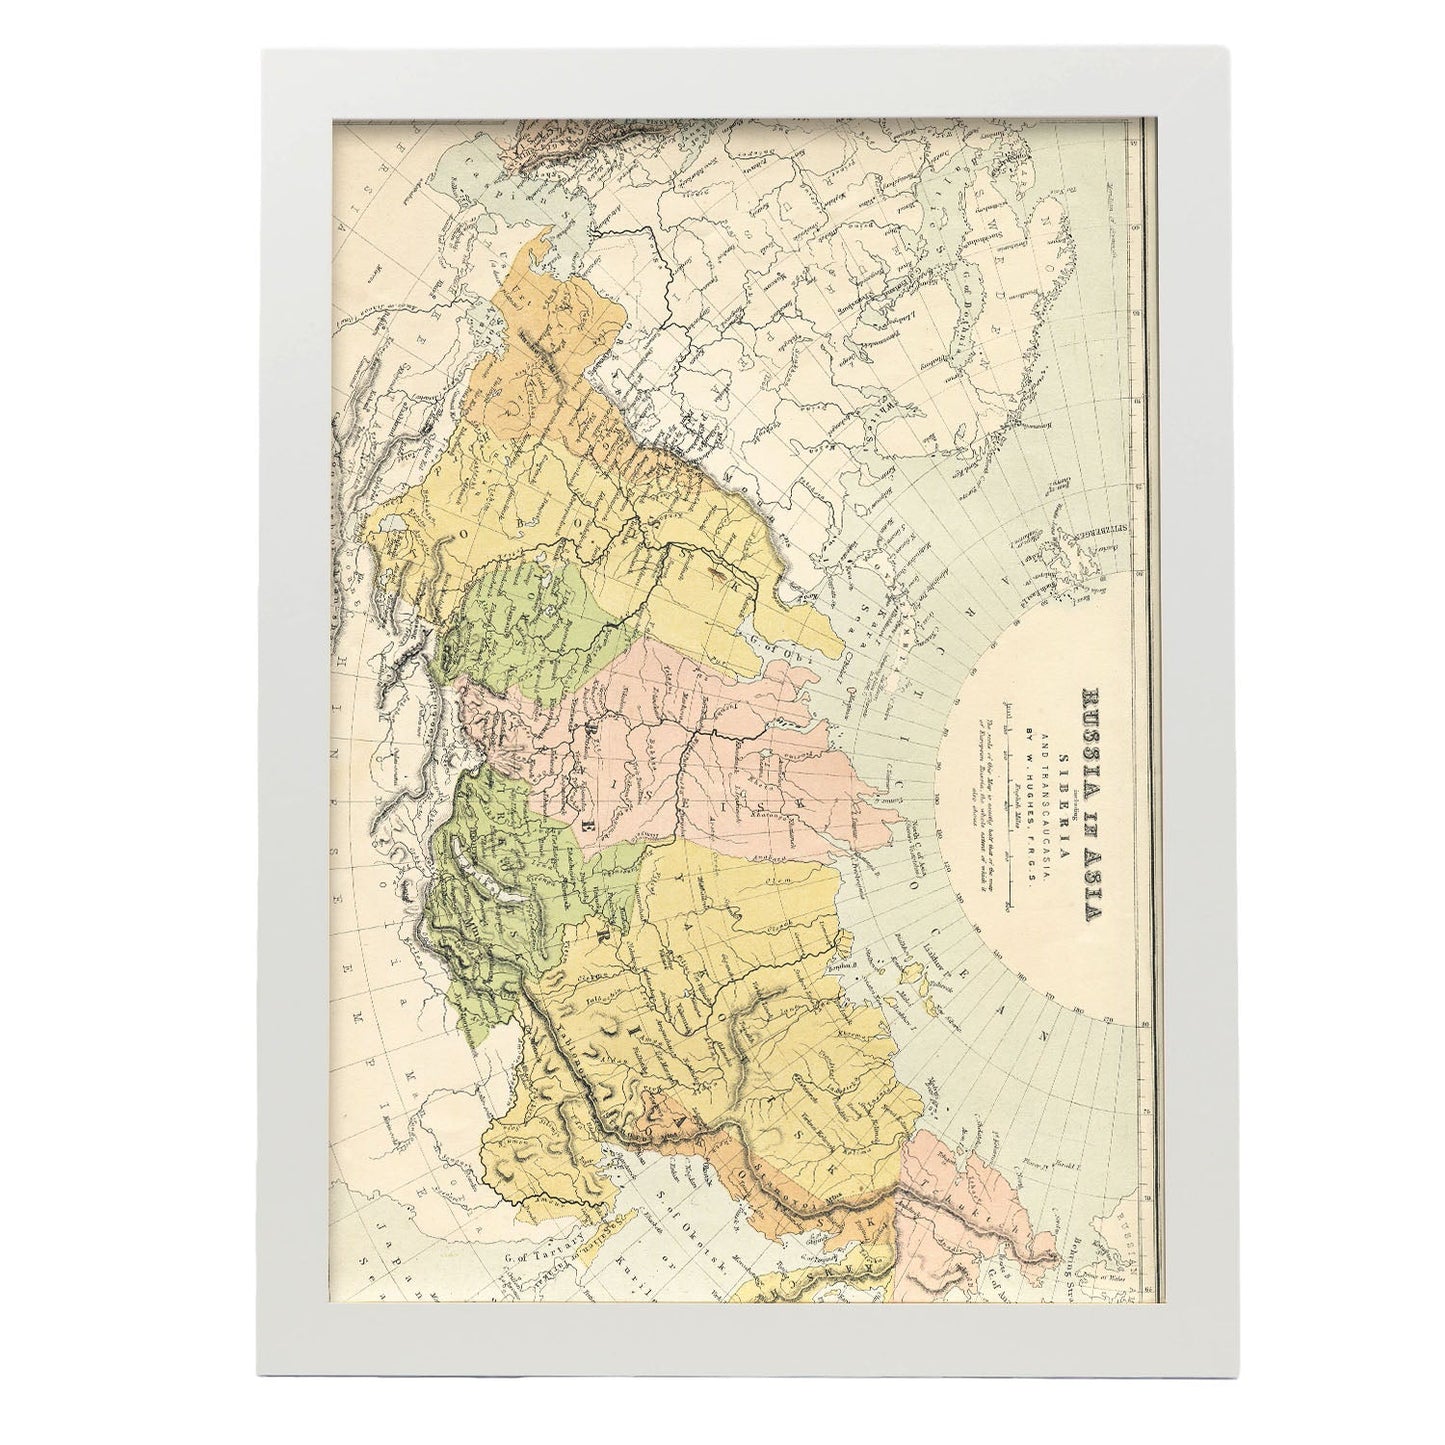 Vintage map of Russia in Europe-Artwork-Nacnic-A3-Marco Blanco-Nacnic Estudio SL